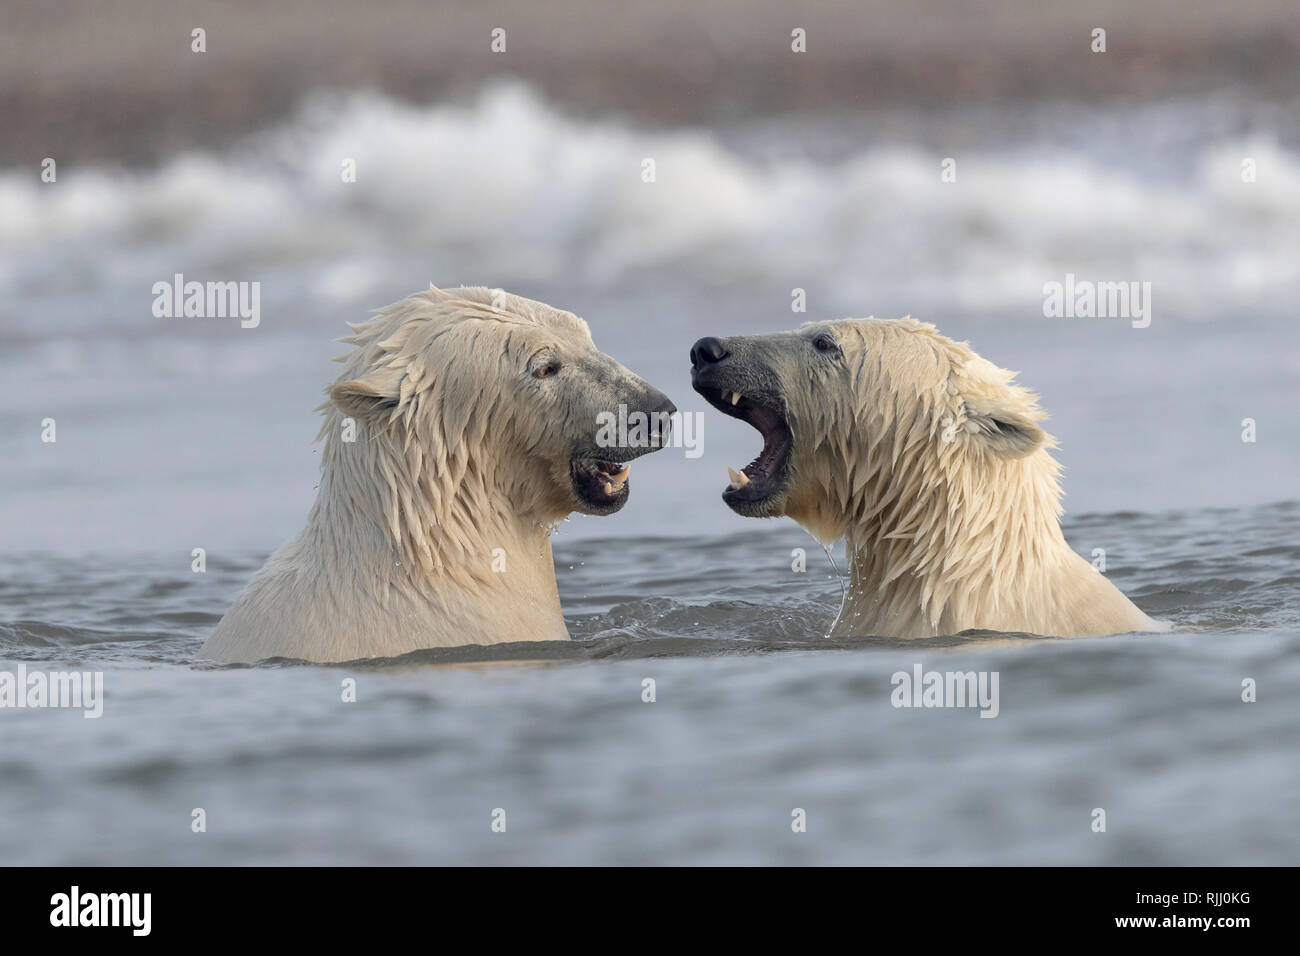 L'ours polaire (Ursus maritimus, Thalarctos maritimus). Deux individus playfighting en eau peu profonde. Banque D'Images